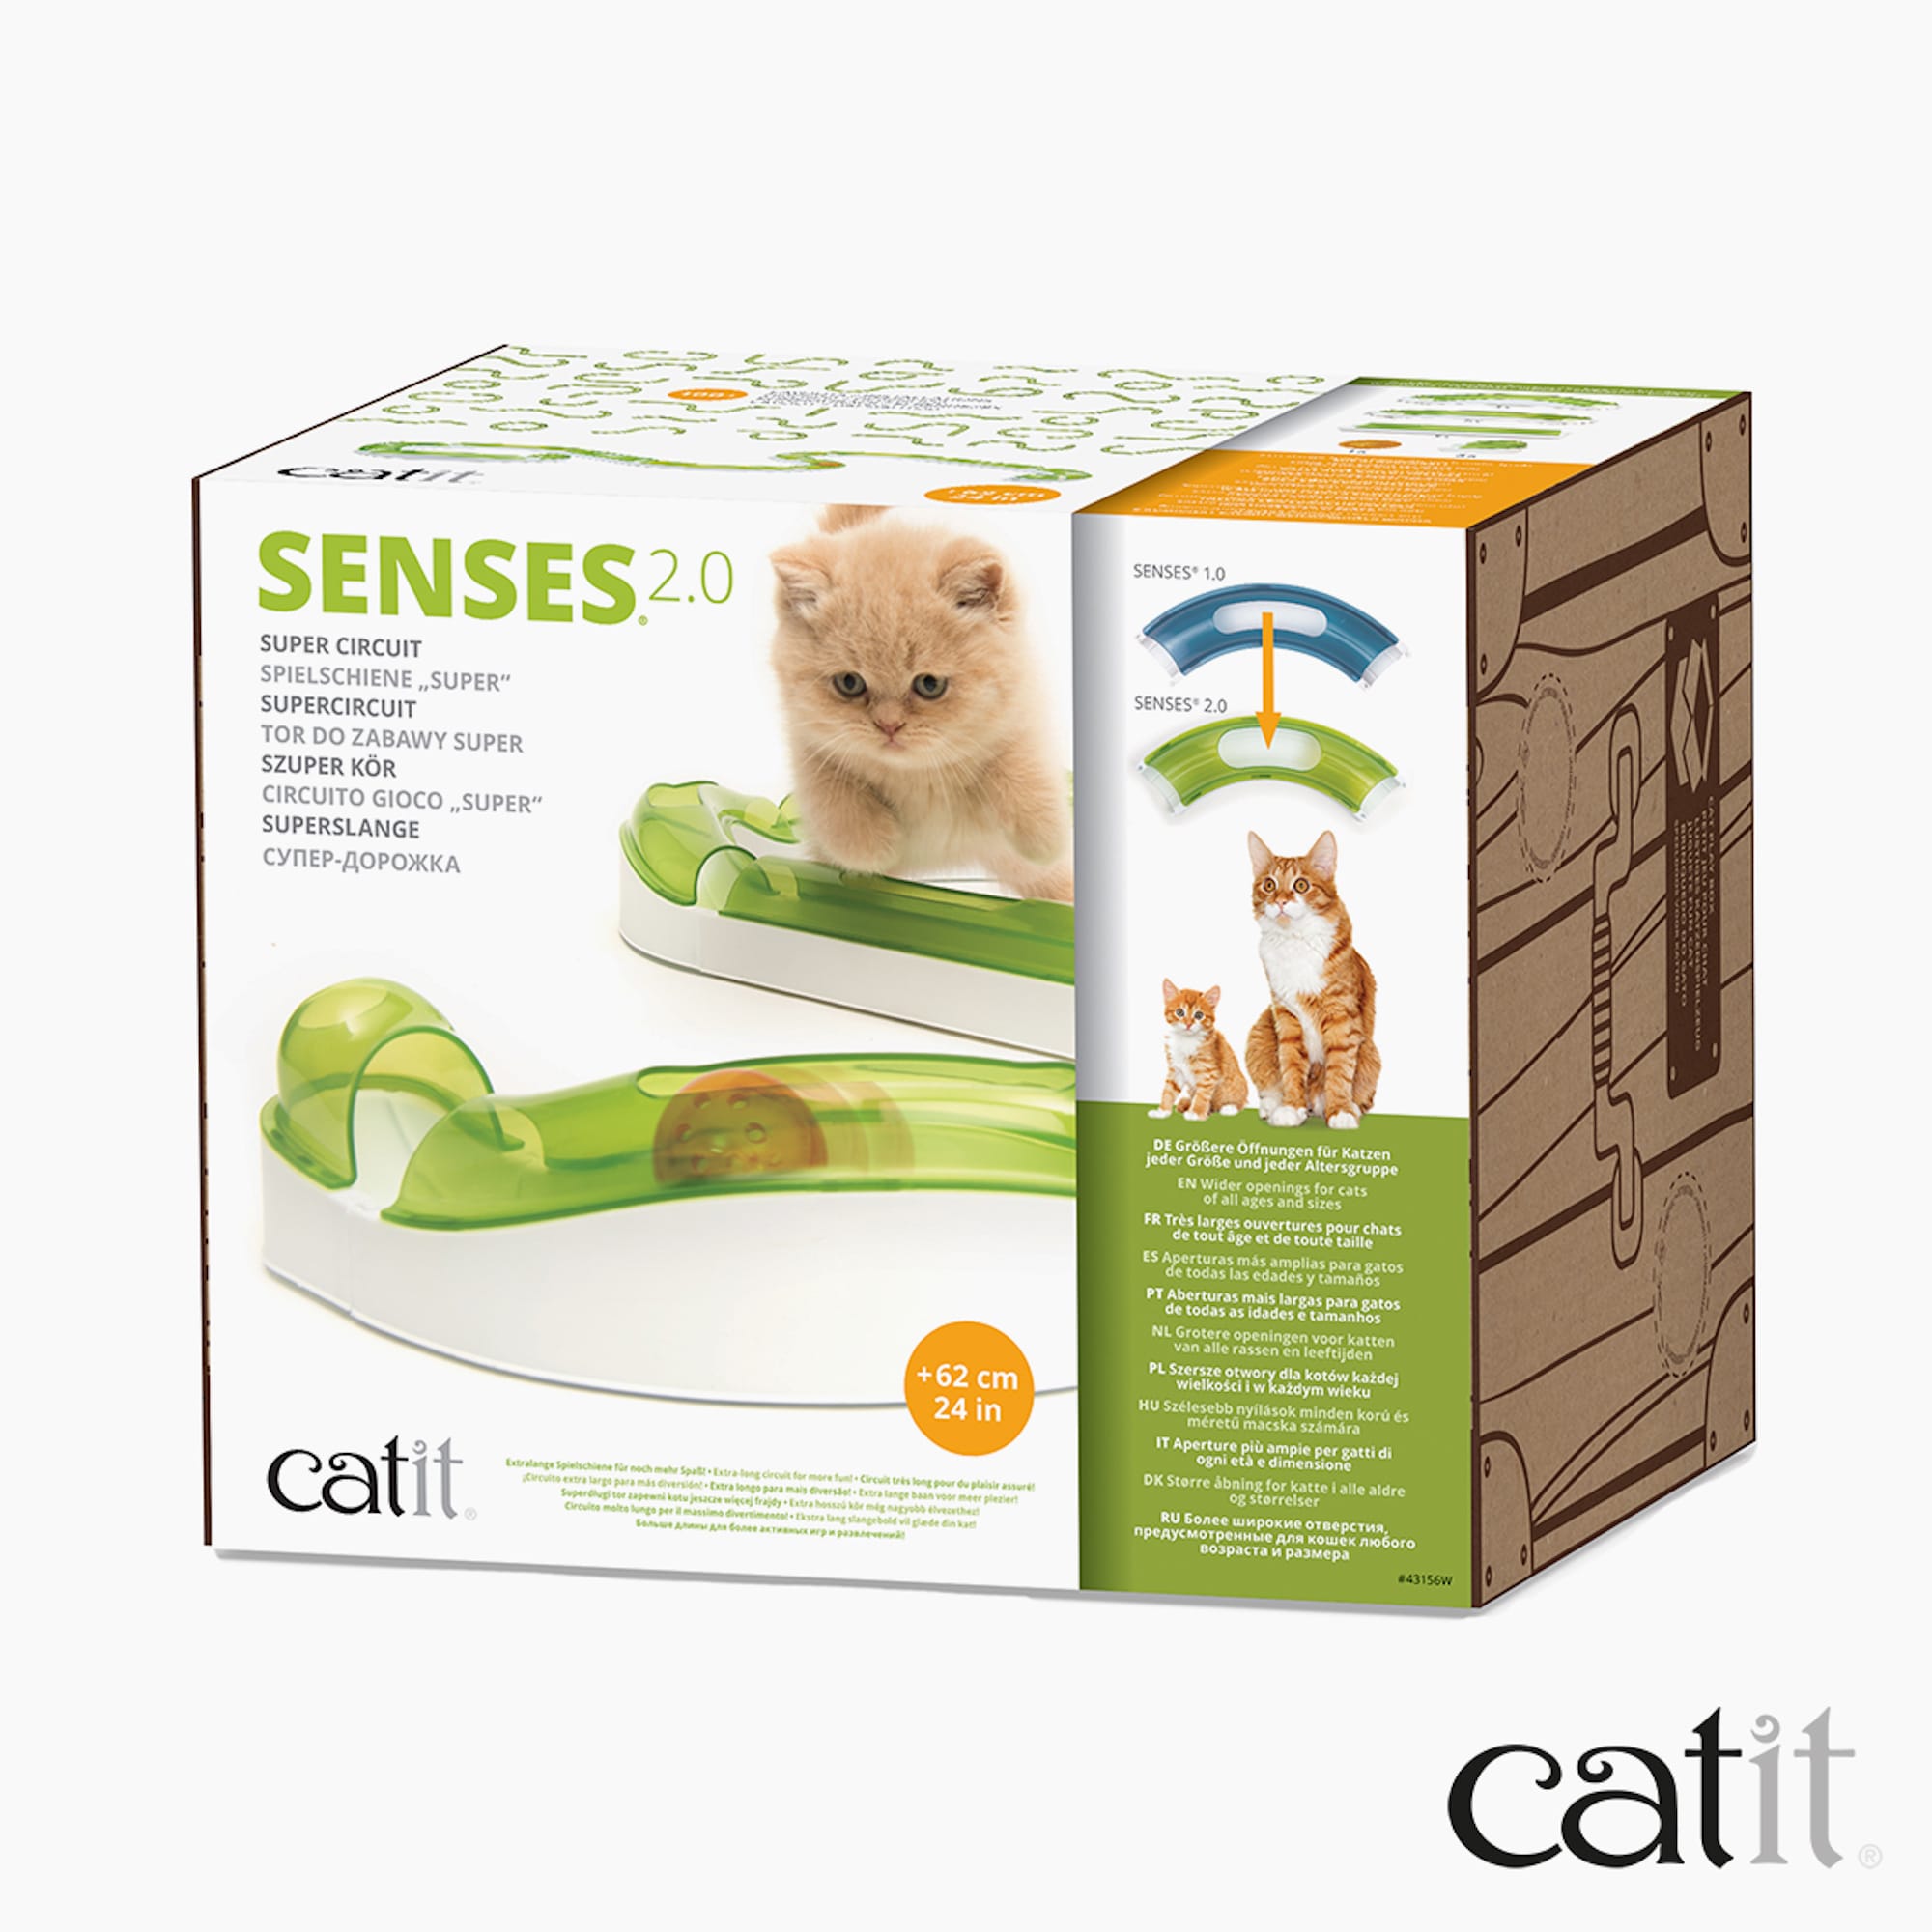 Catit Senses 2.0 Super Circuit review